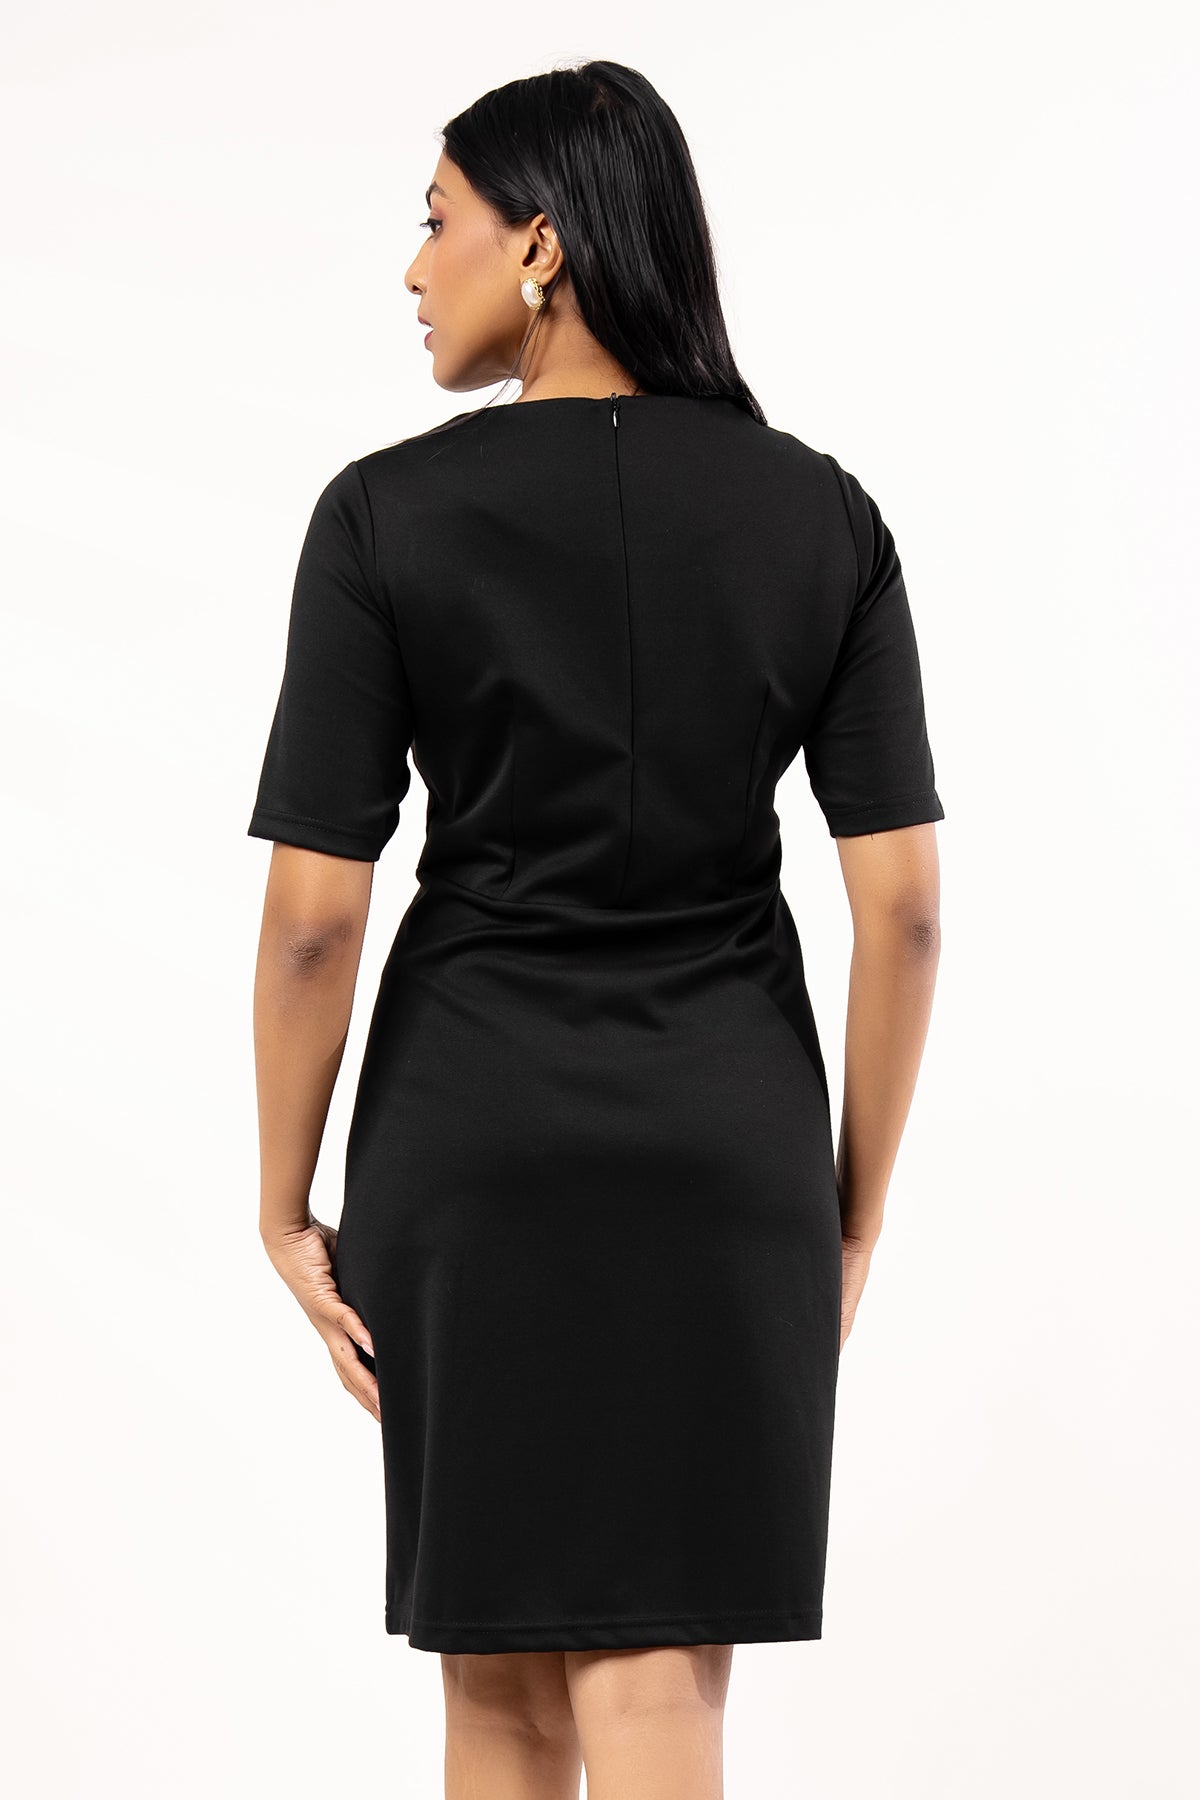 Envogue Women's Elbow Length Office Dress